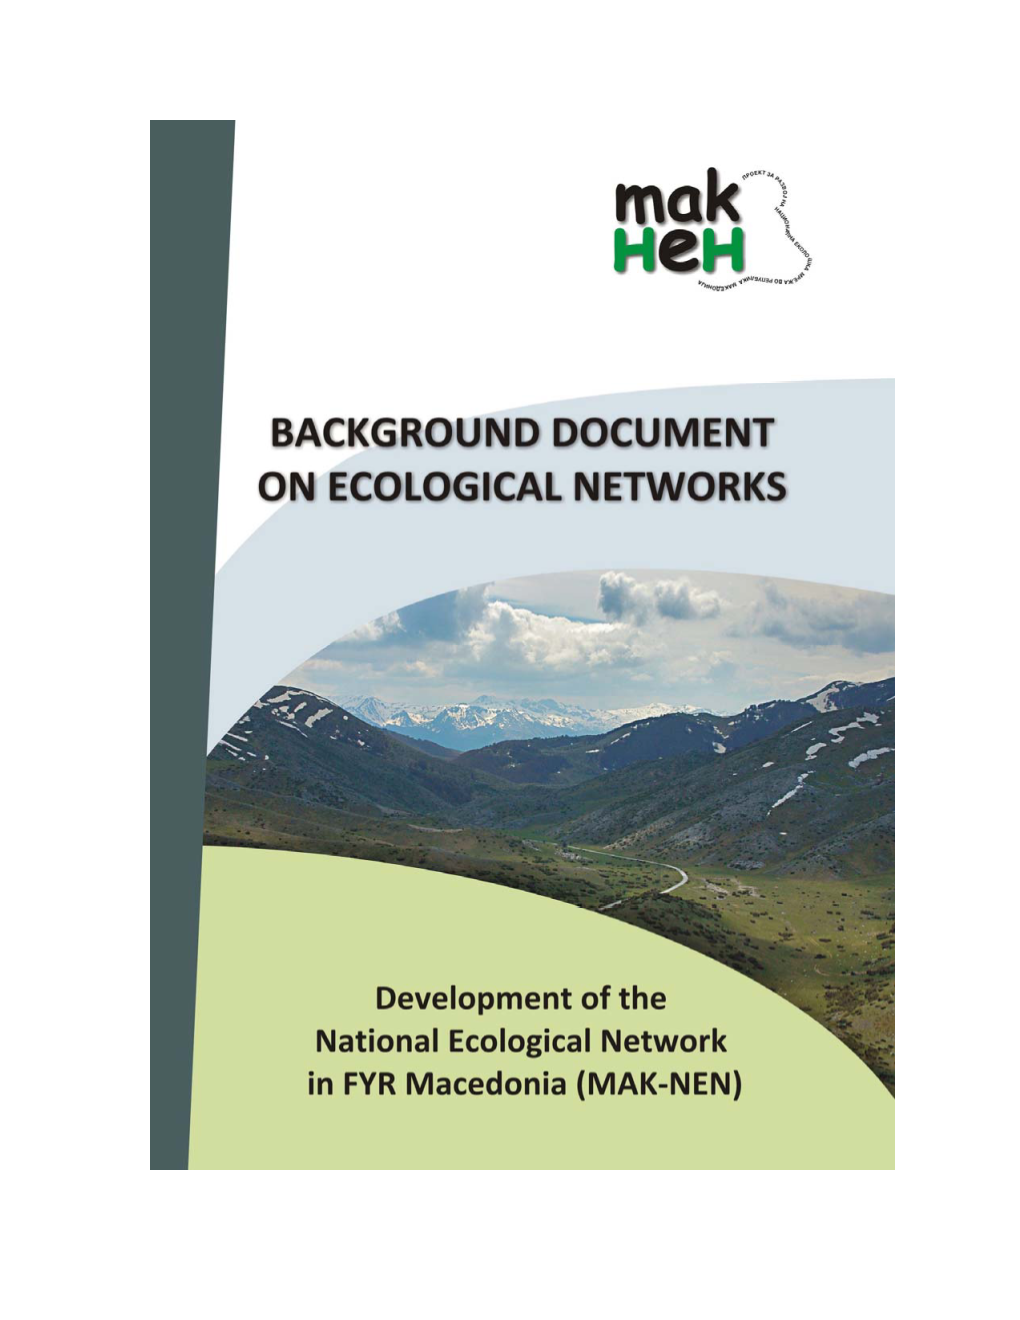 Development of the National Ecological Network in FYR Macedonia (MAK-NEN)